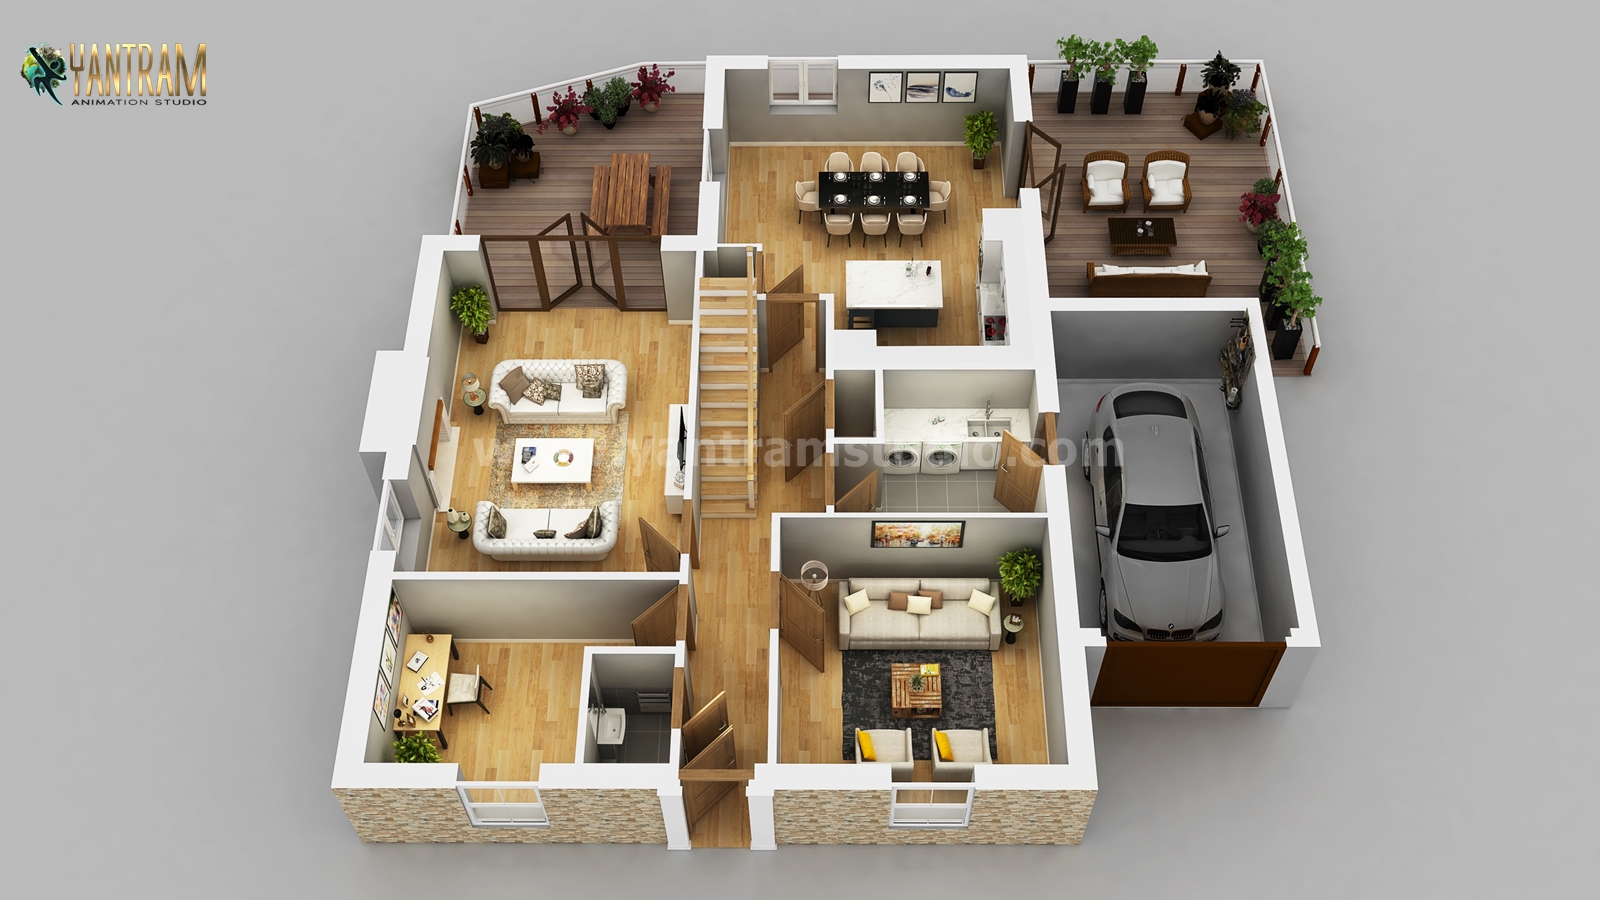 3D Home Floor Plan Design of Residential Apartment/House by 3d floor plan designer of yantram 3d floor plan services company, Meridian – Idaho